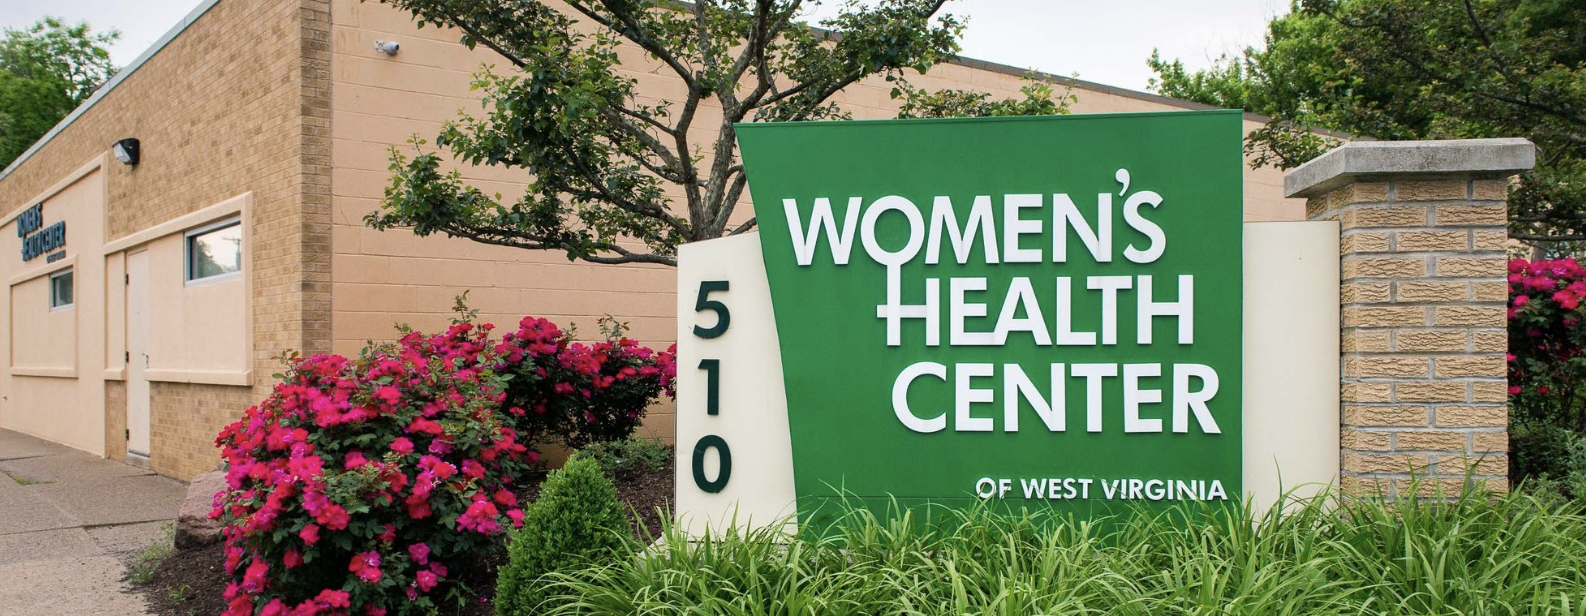 The Women’s Health Center of West Virginia